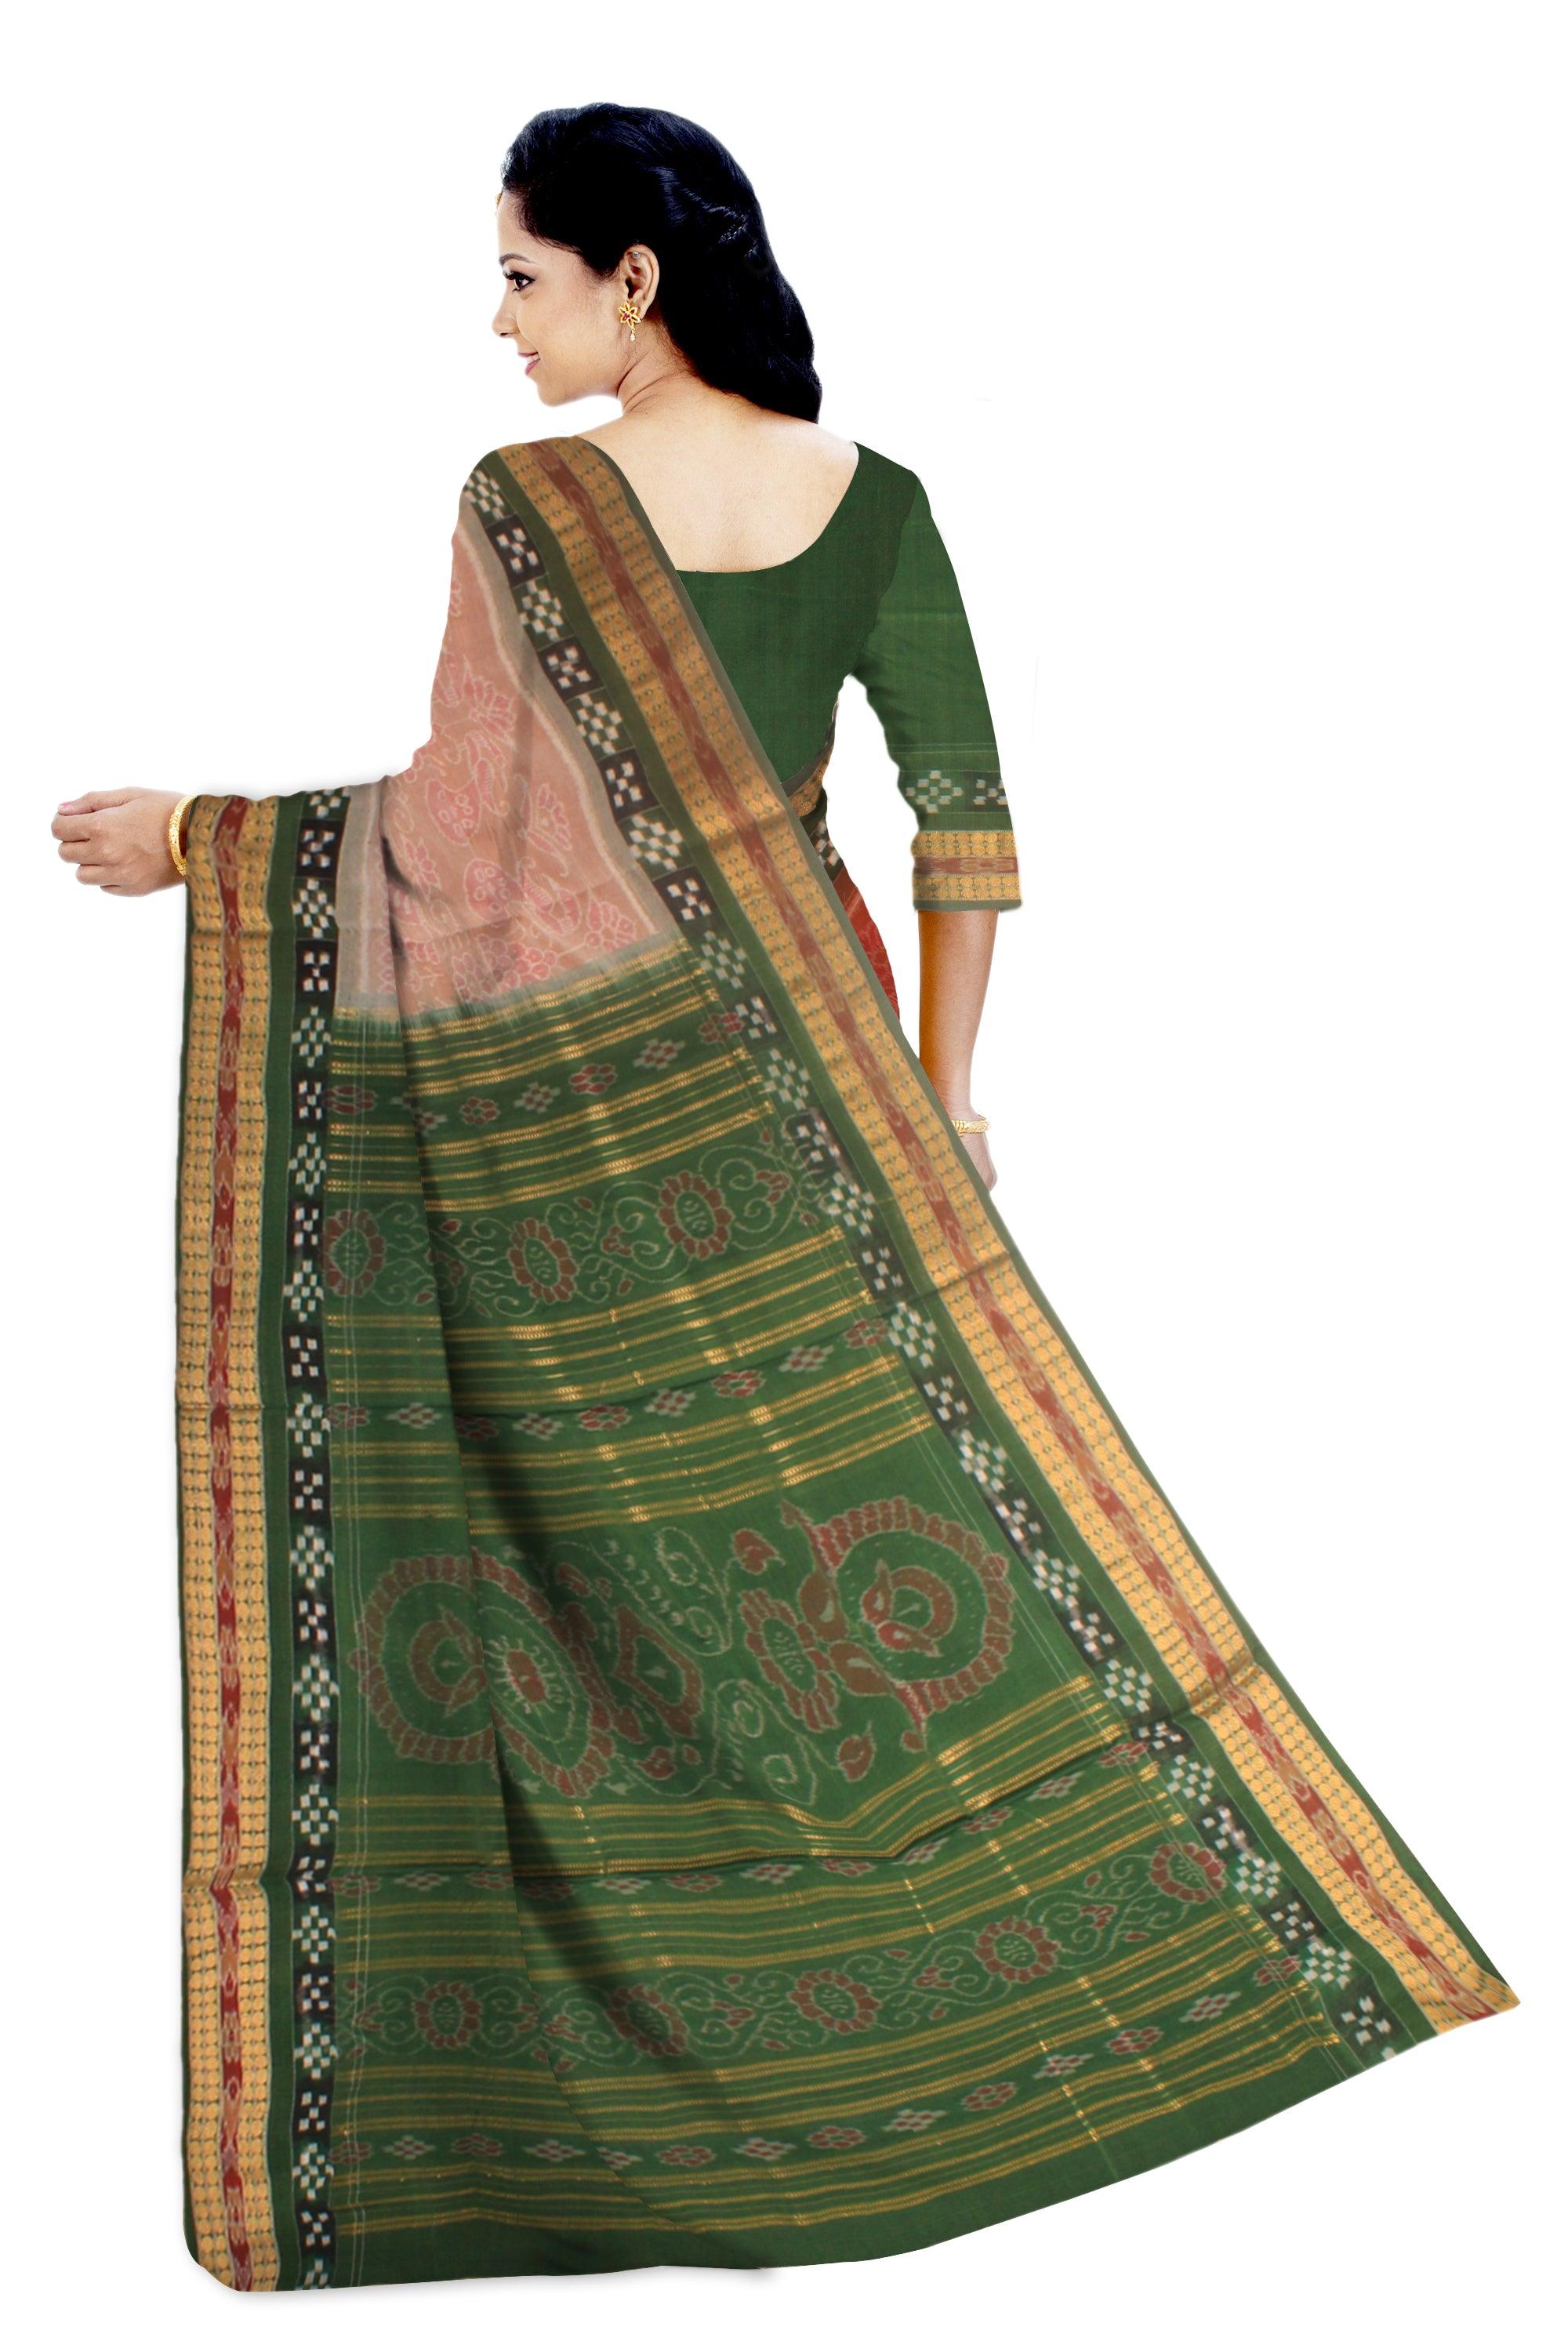 Sambalpuri cotton saree in a Very unique design with blouse piece. - Koshali Arts & Crafts Enterprise